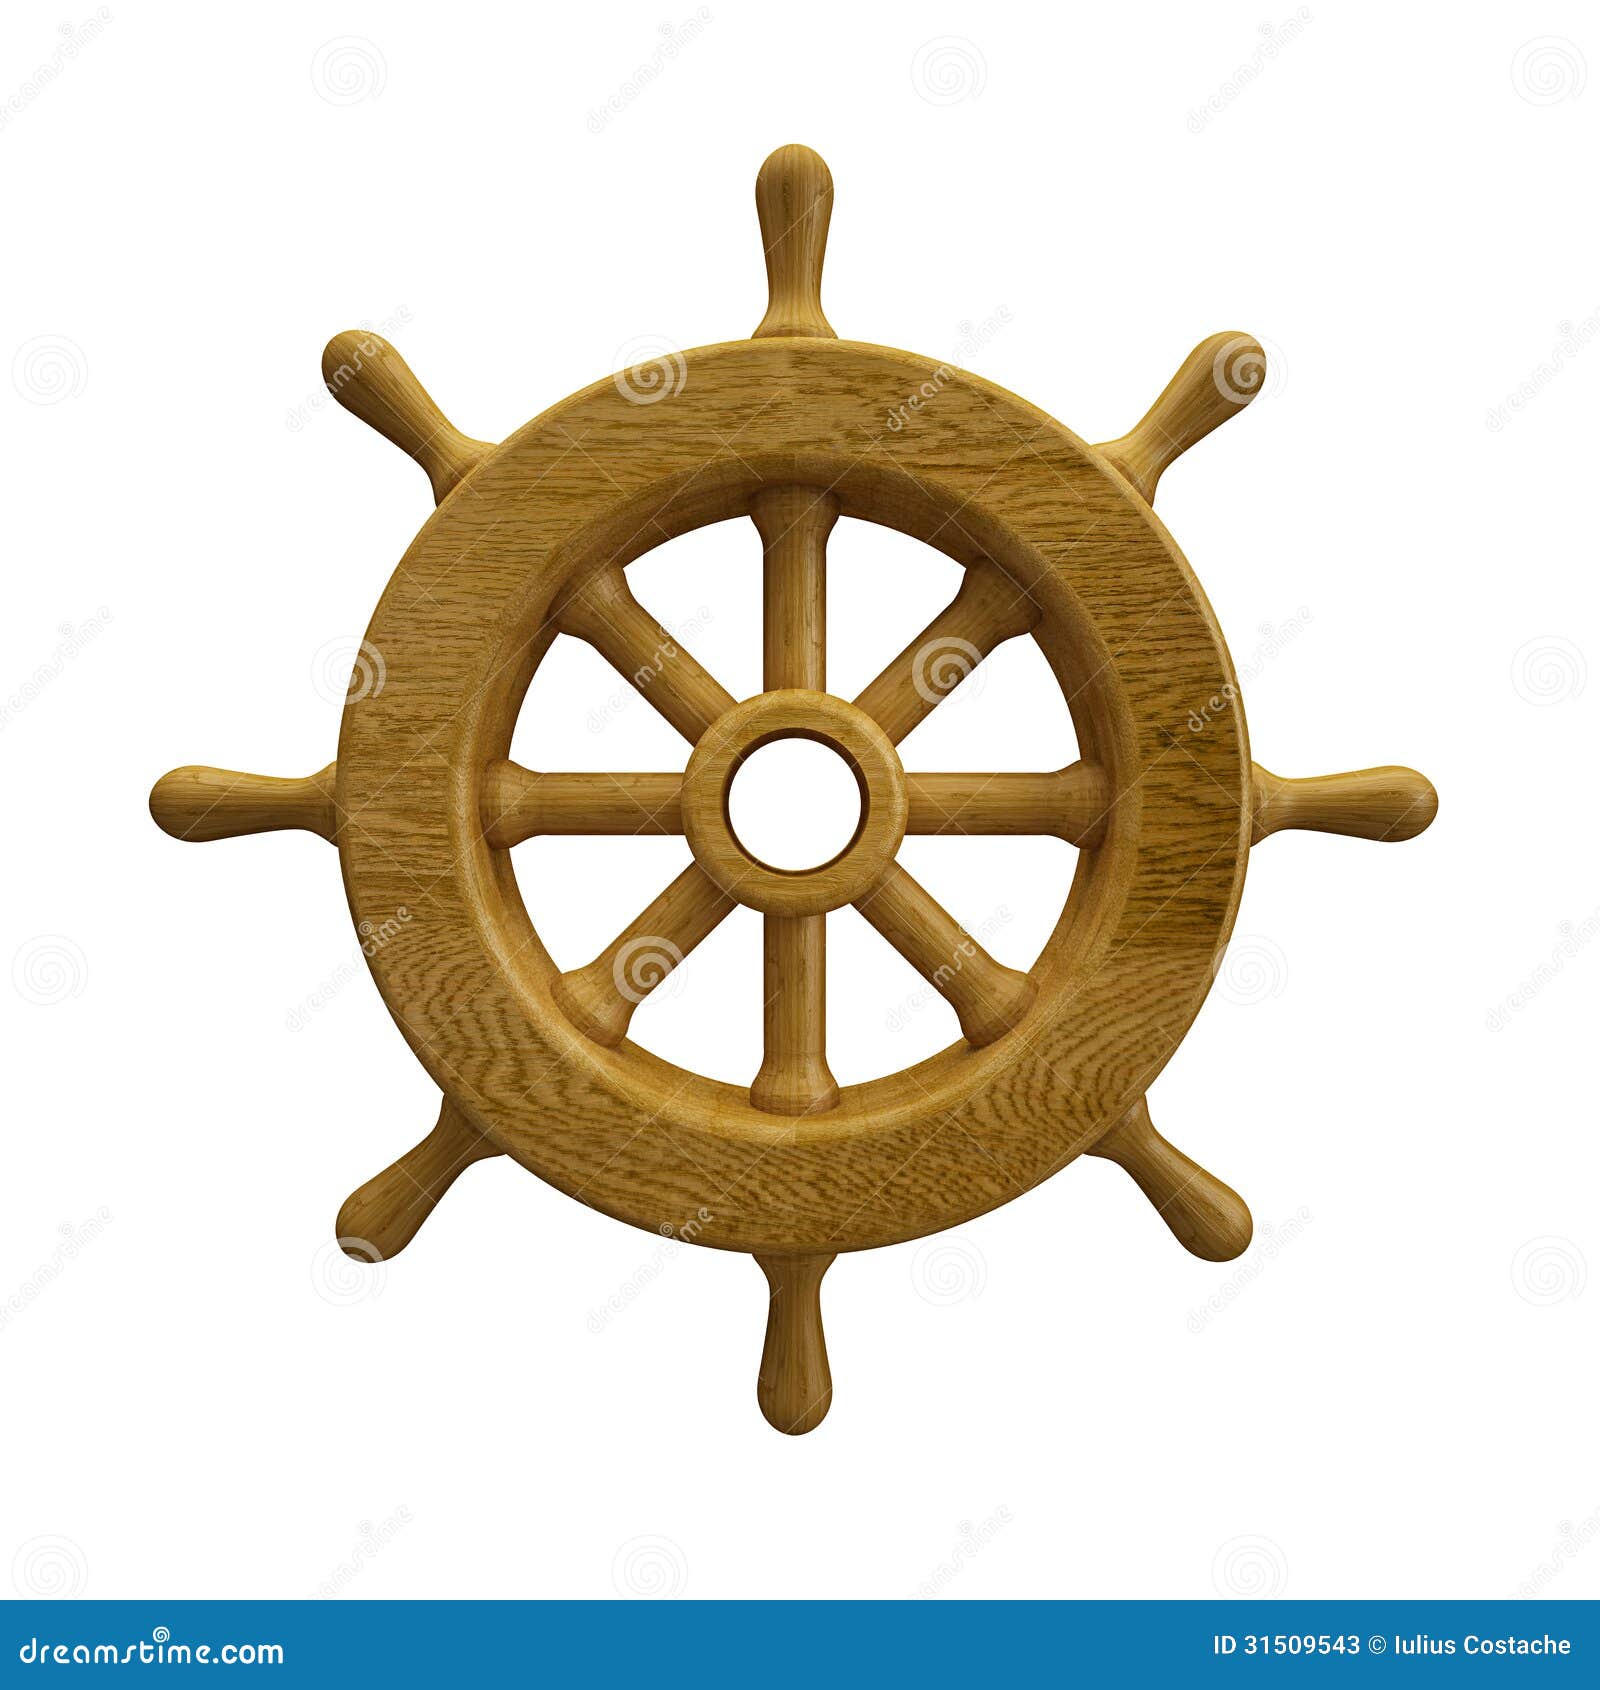 clipart ship steering wheel - photo #22